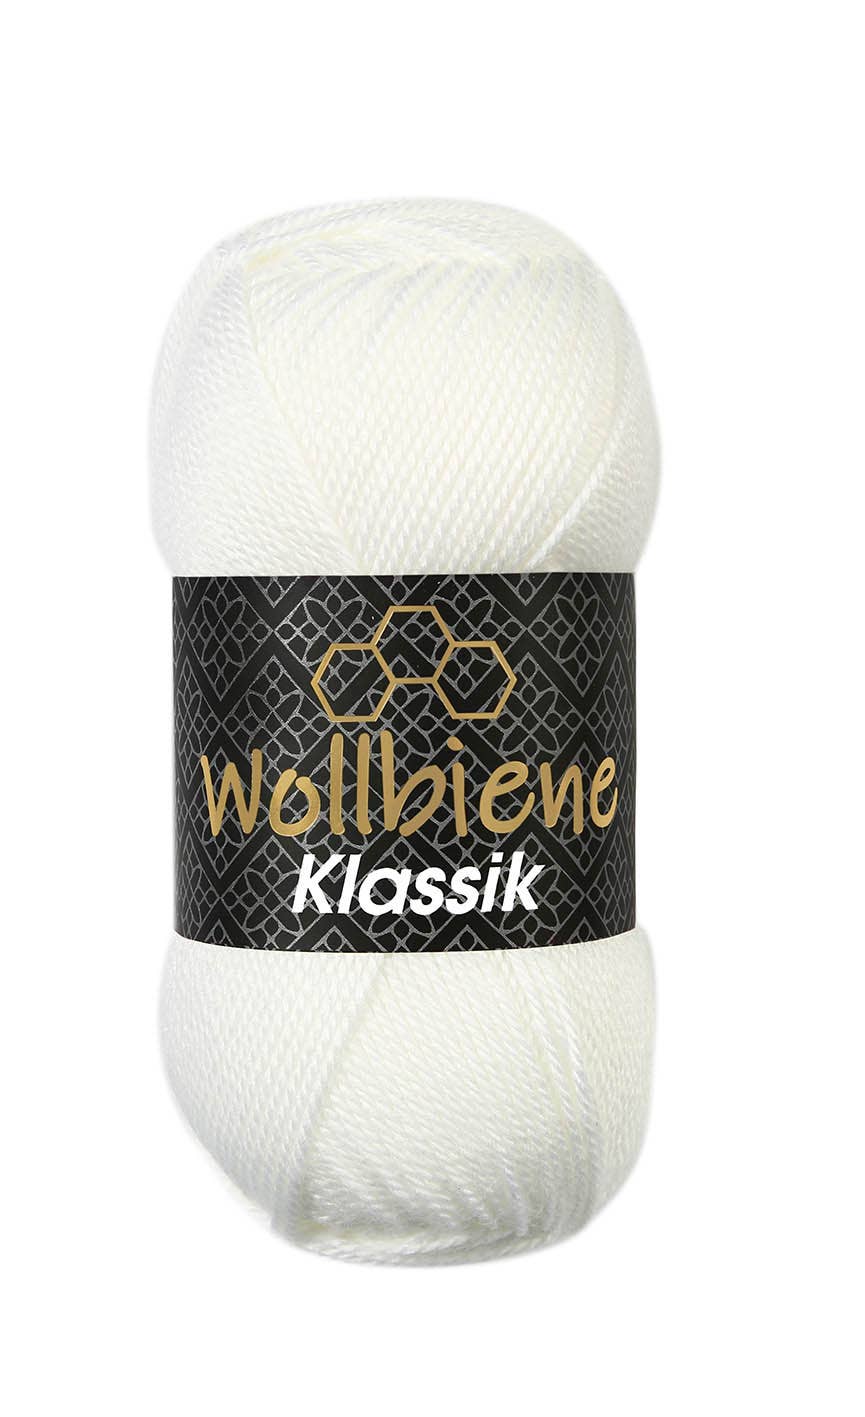 Wollbiene - Wollbiene Klassik Strickwolle Uni Farben Häkelwolle 100g